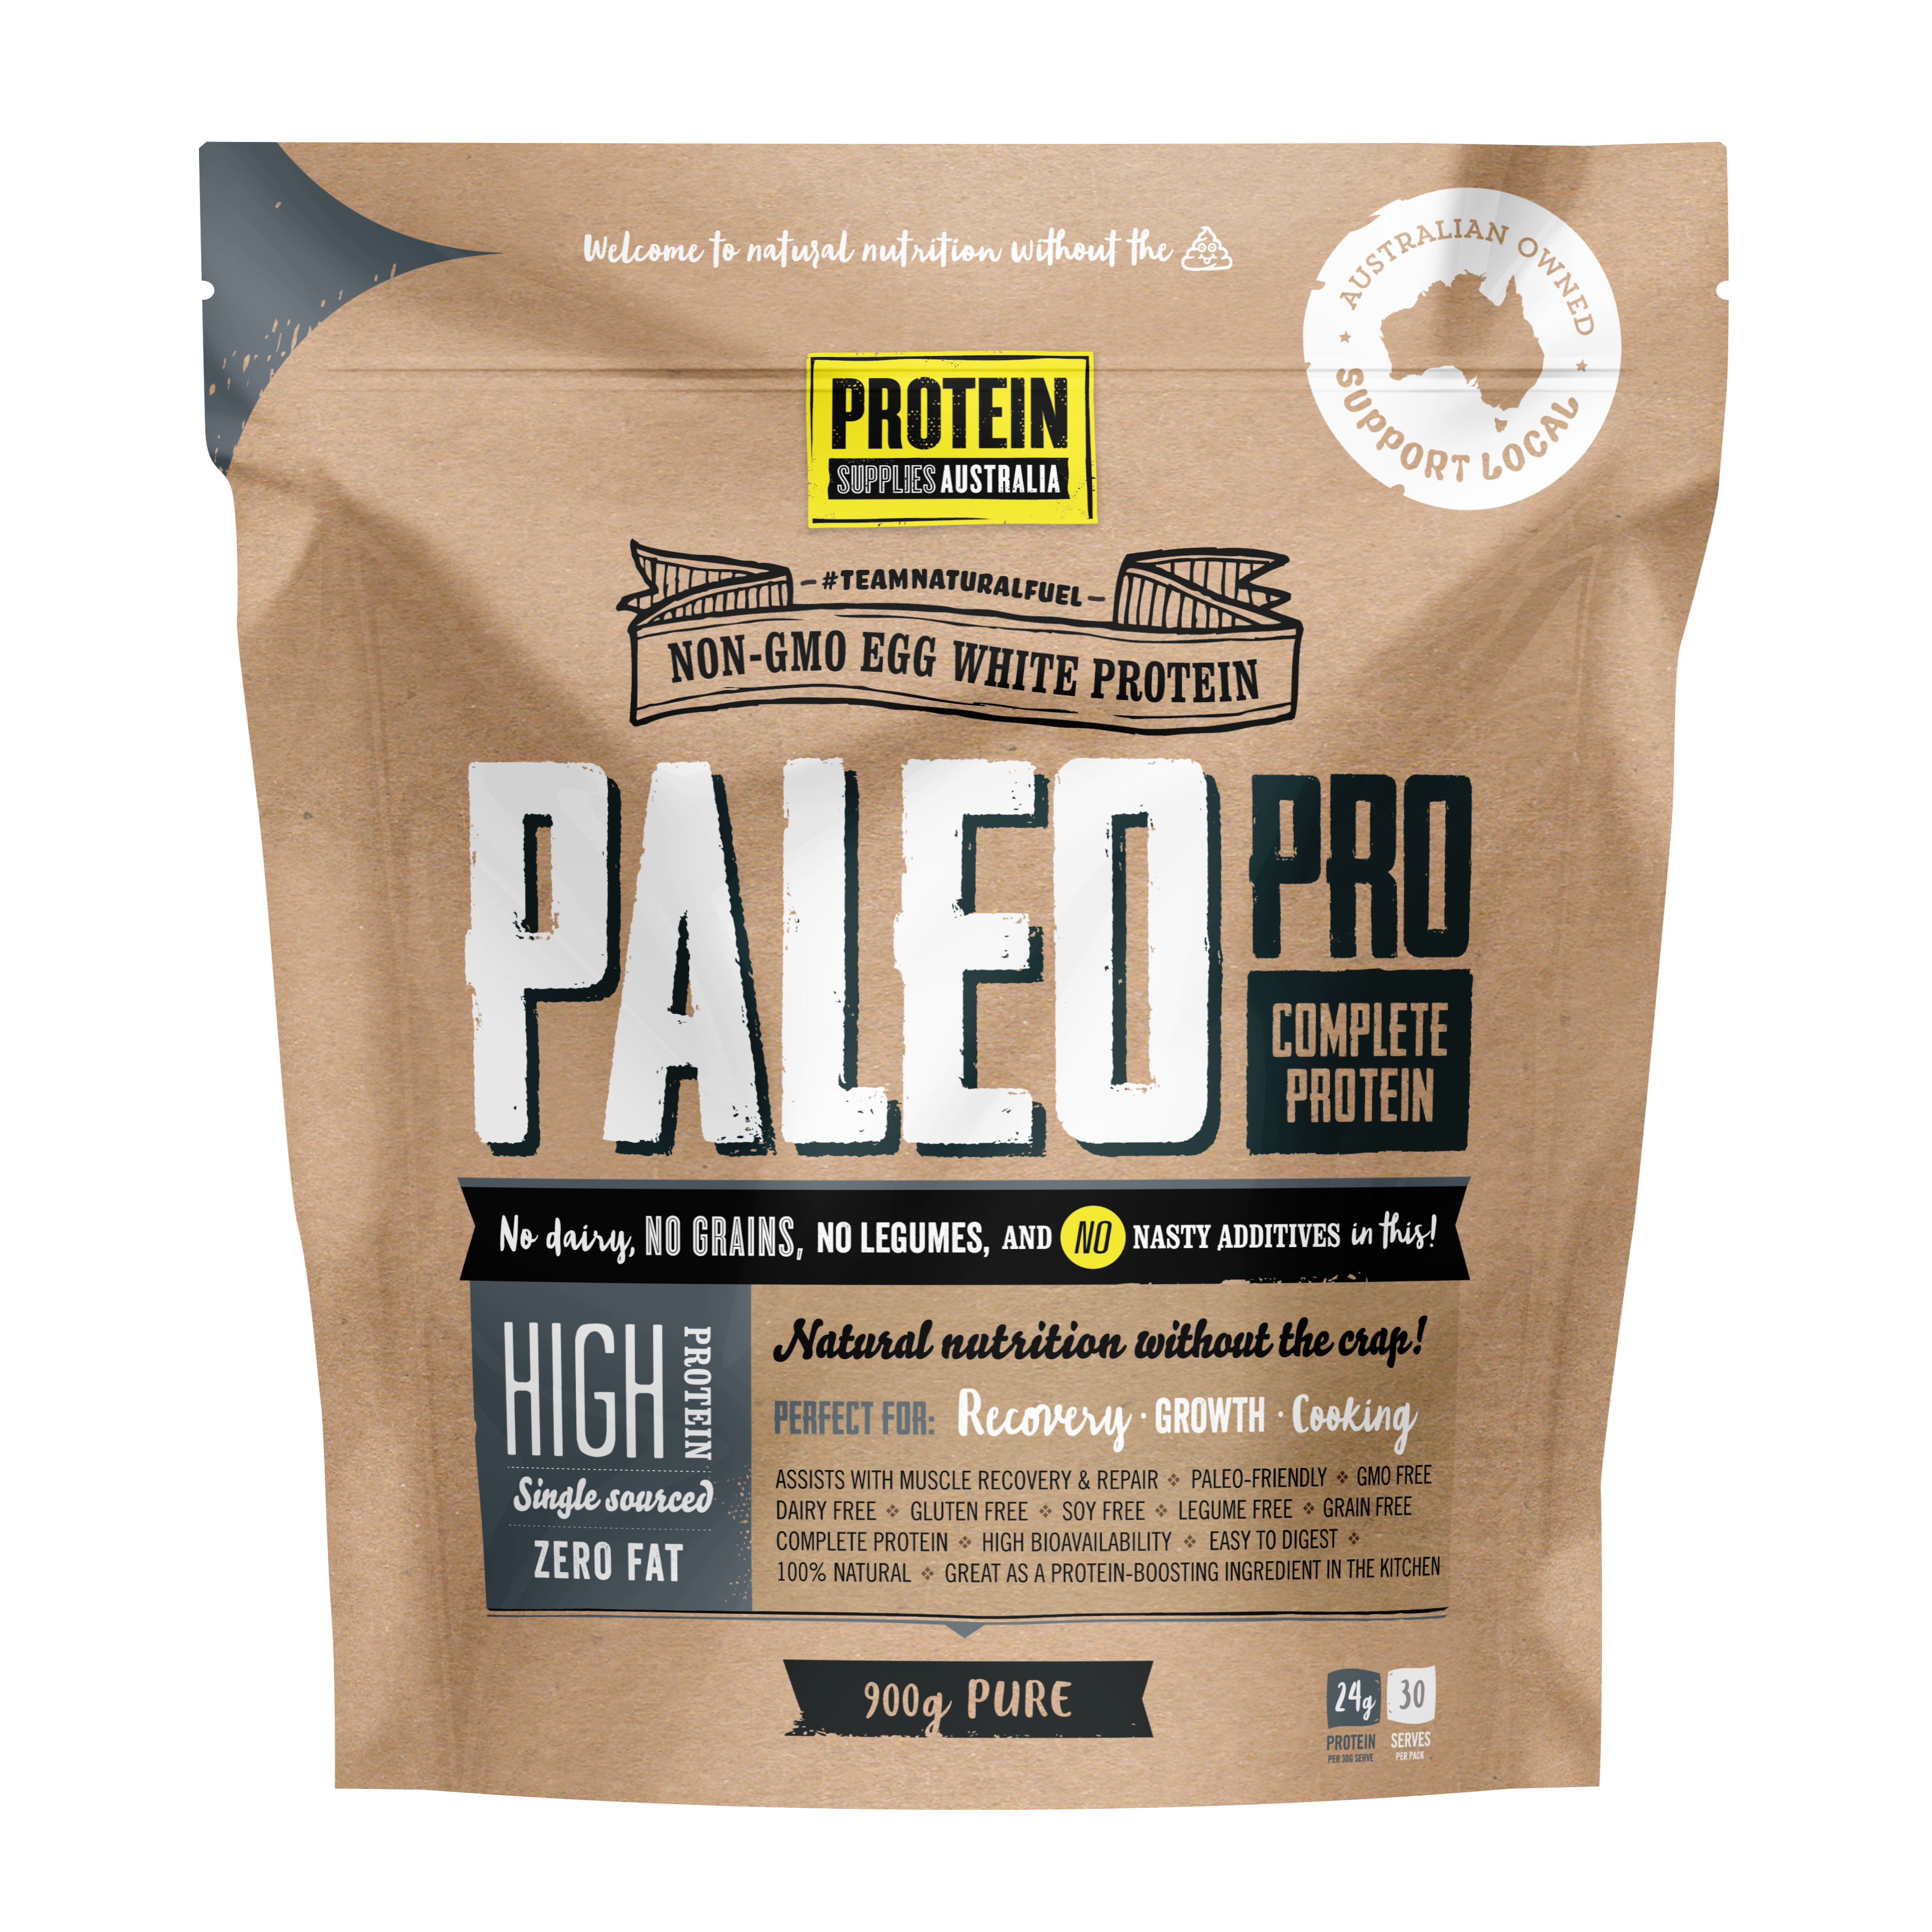 protein supplies aust. paleopro (egg white protein) pure 900g